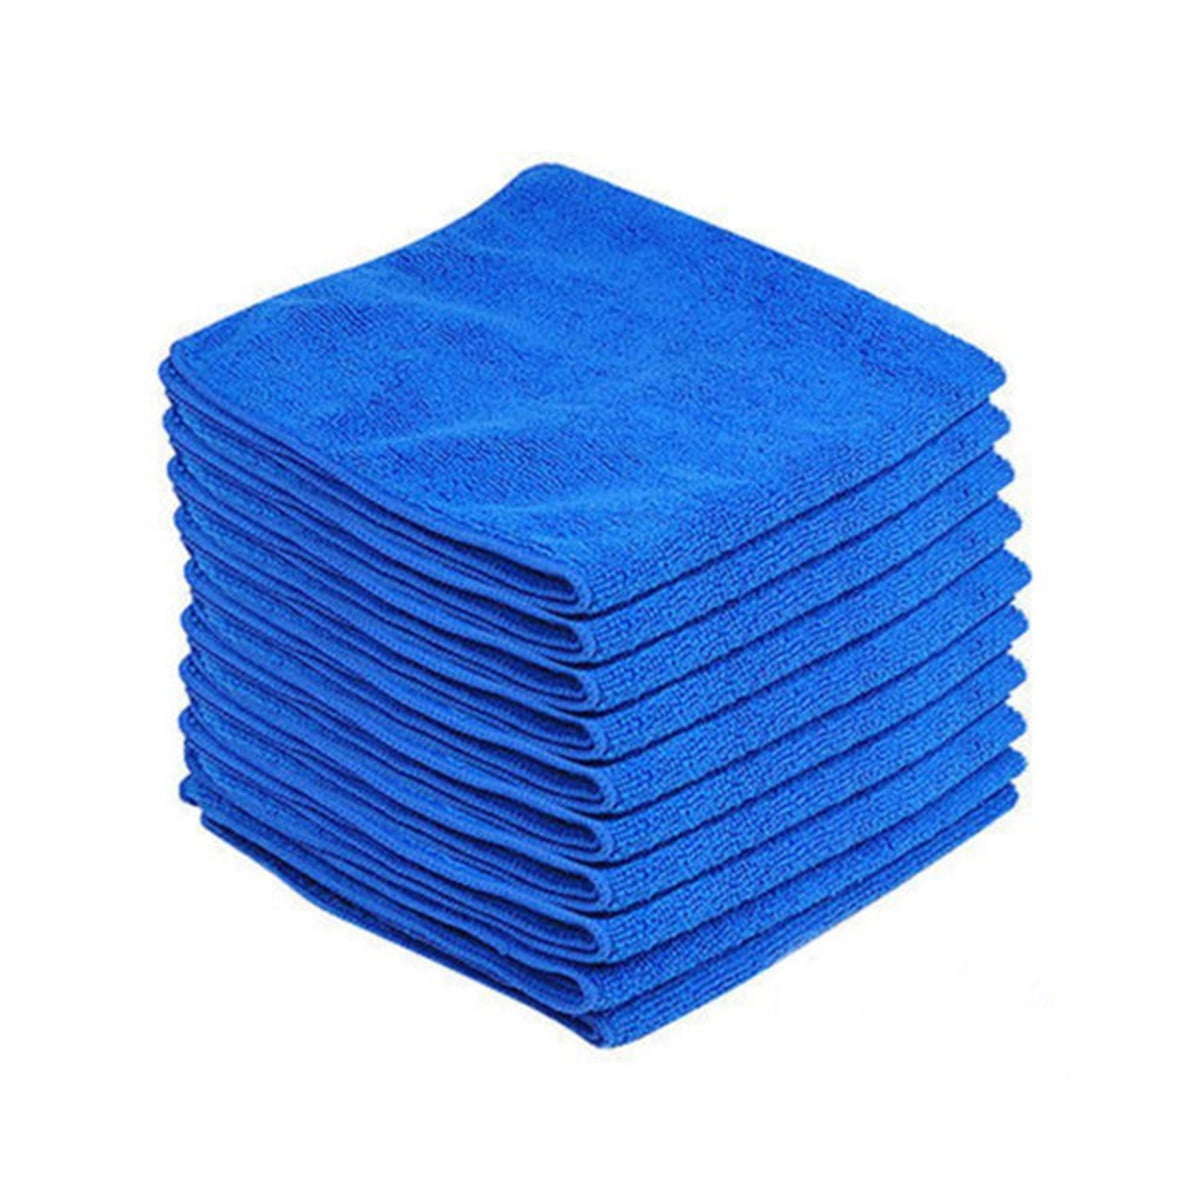 Blue Microfibre Cleaning Soft Cloth Towel Rag Car Polishing Detailing Wash Towel 